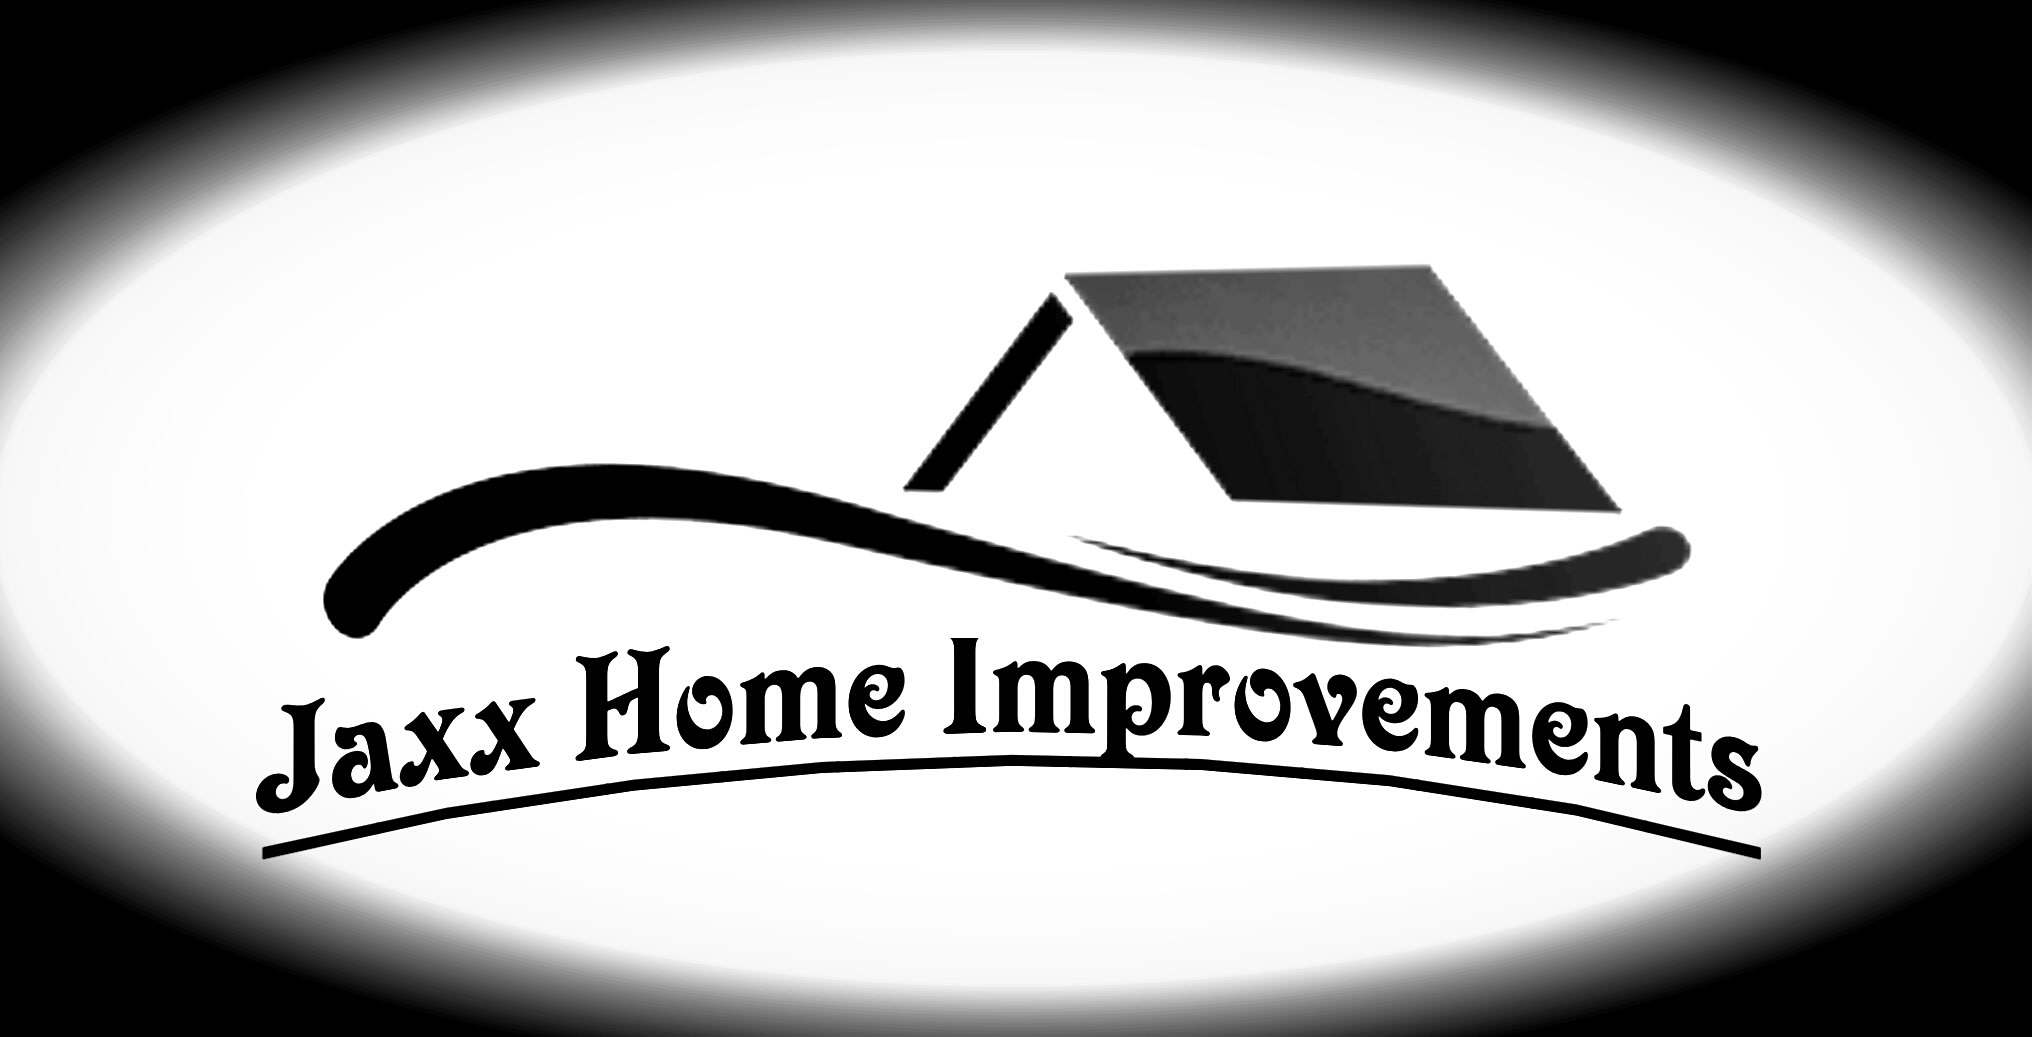 Jaxx Home Improvements